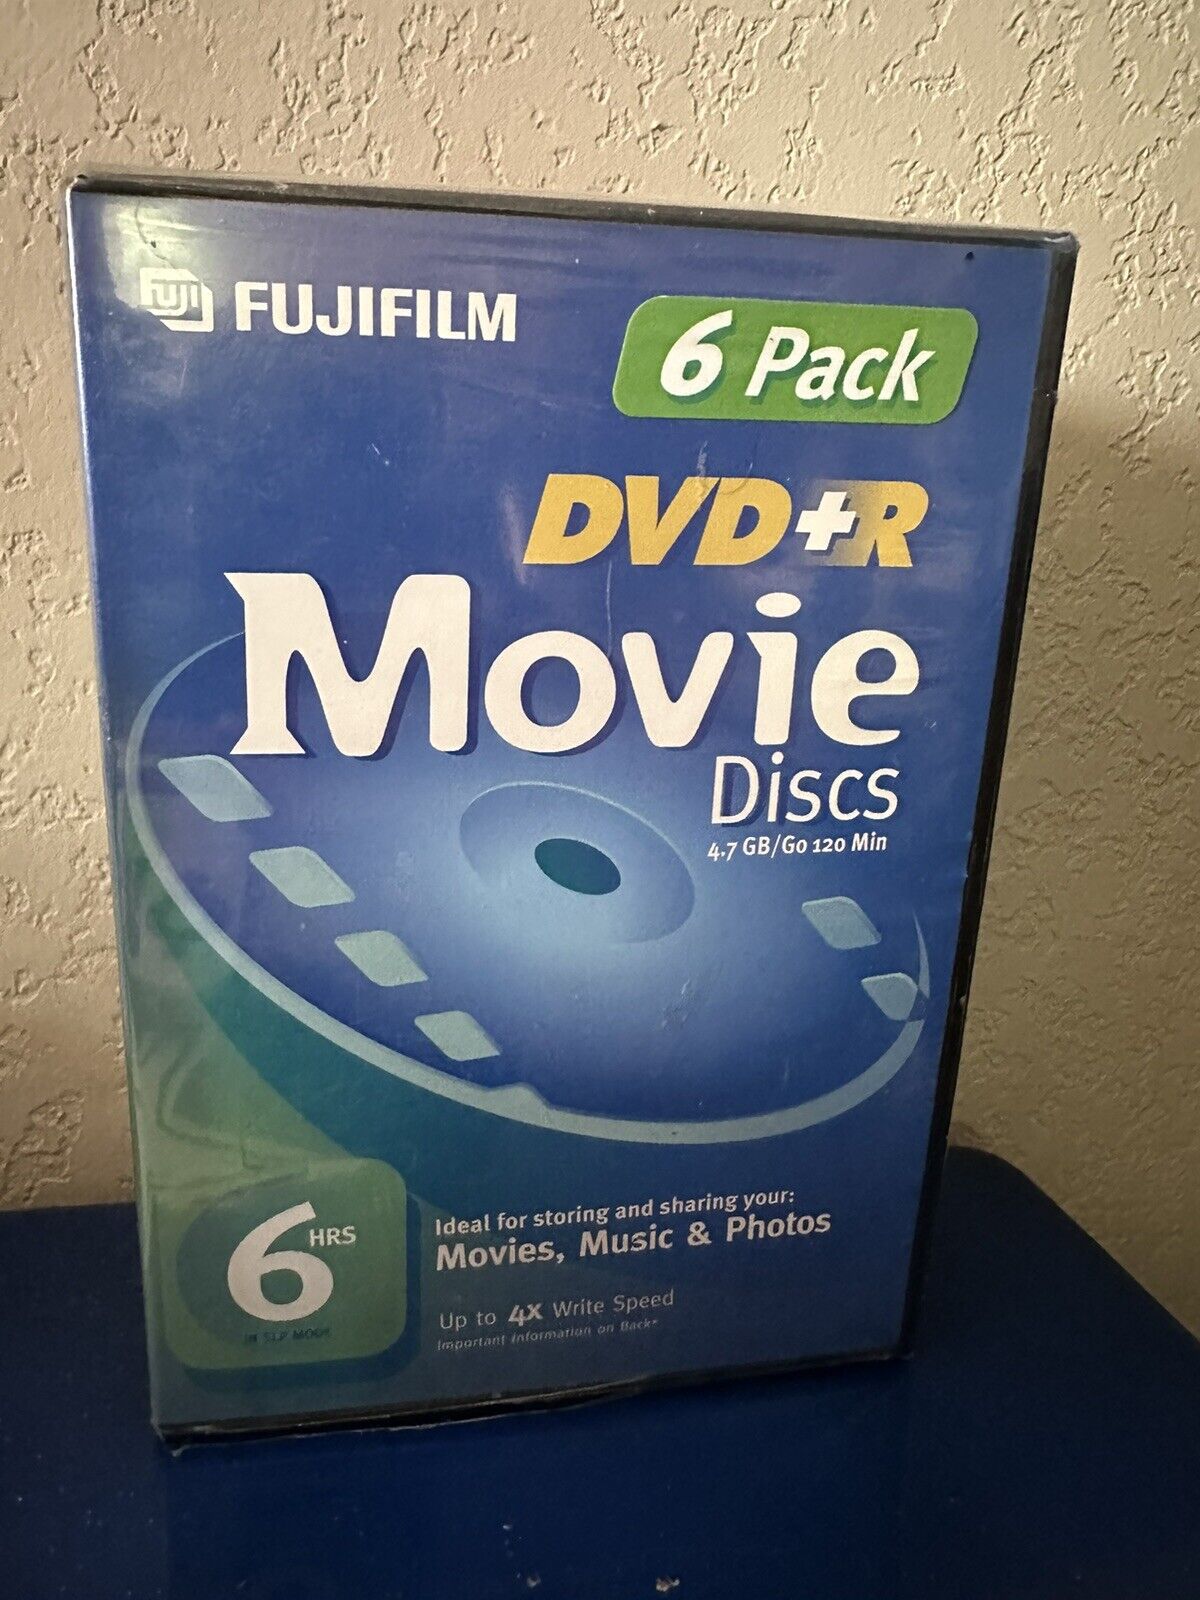 Fujifilm 6 Pack DVD+R Movie Discs. 4.7GB /Go 120 minutes/6 Hrs In SLP Mode